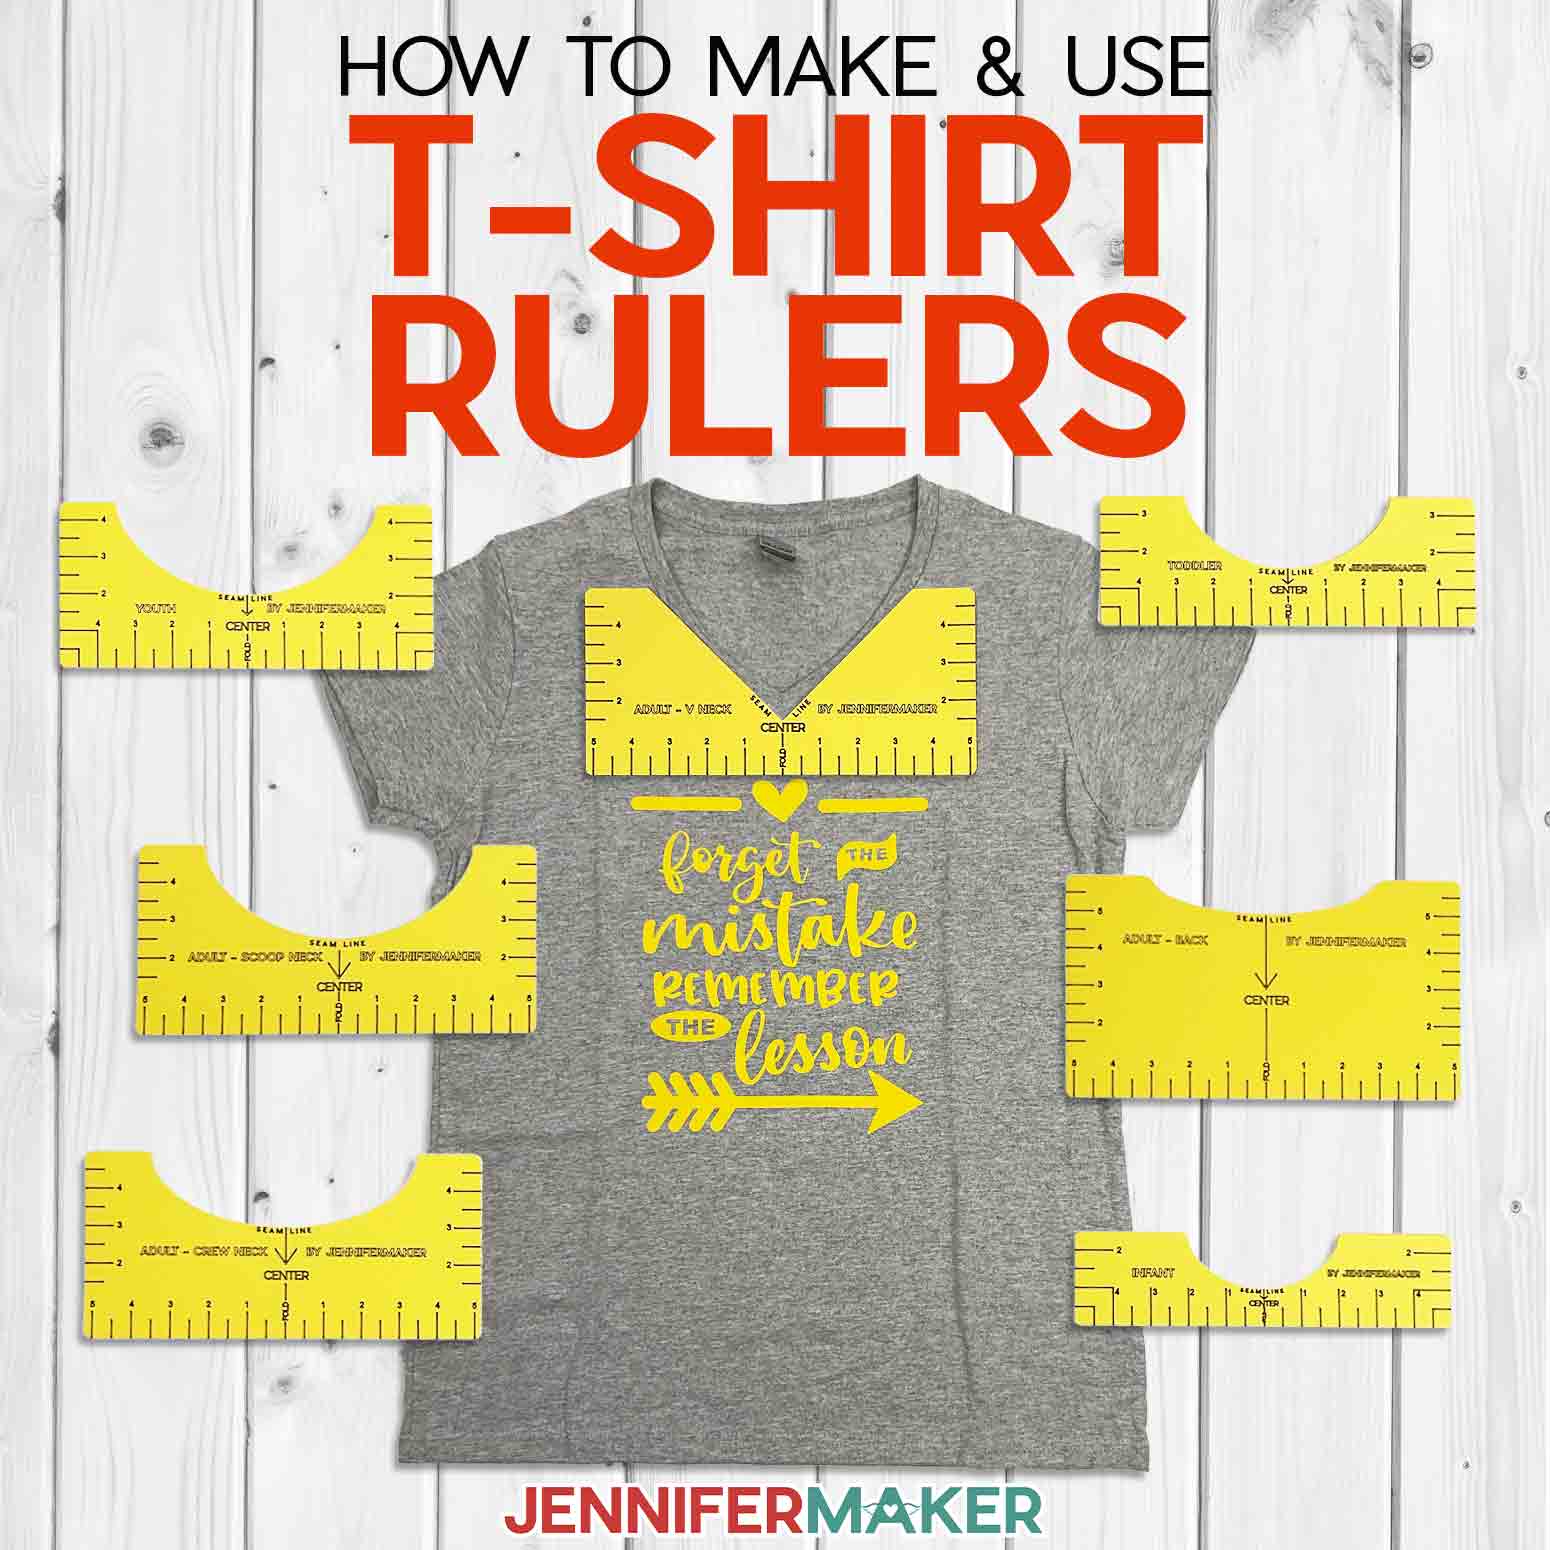 Tegenhanger Alice Baars T-Shirt Ruler Guide - How to Get Perfect Placement! - Jennifer Maker